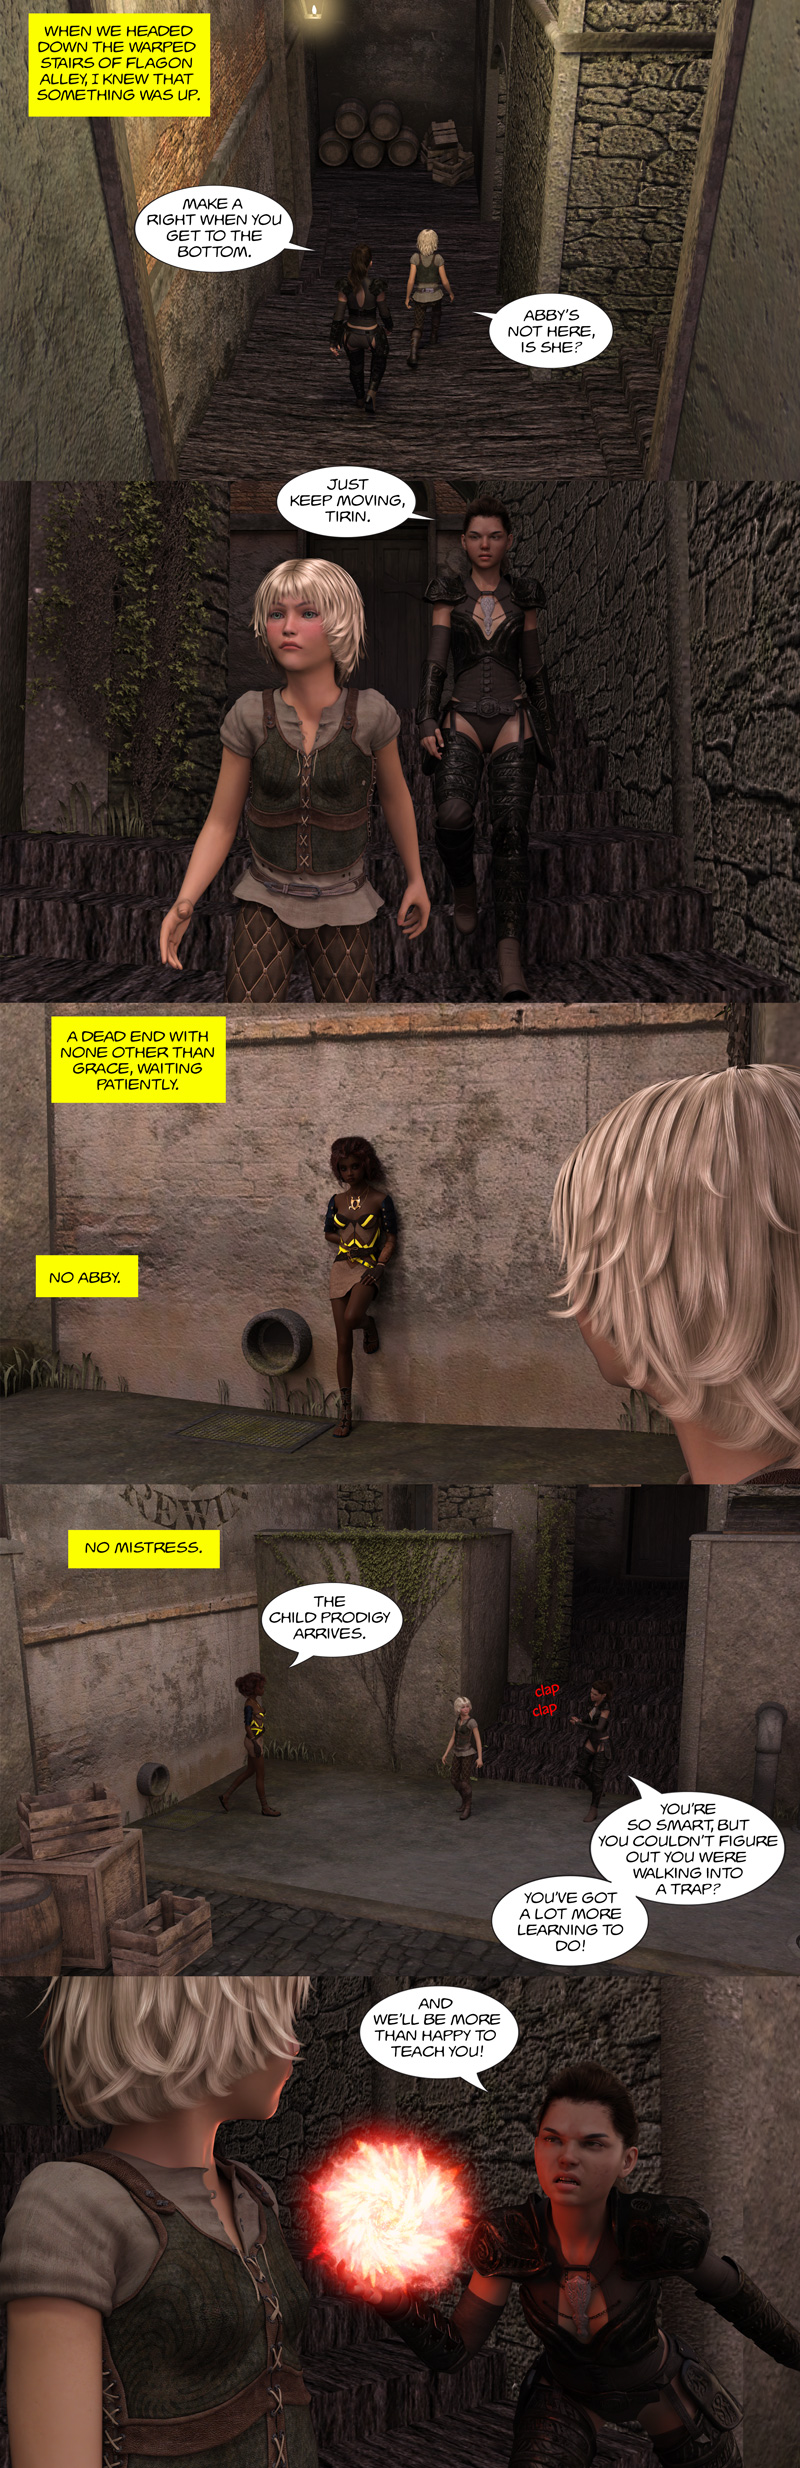 Chapter 16, page 9 – Grace and Erithra ambush